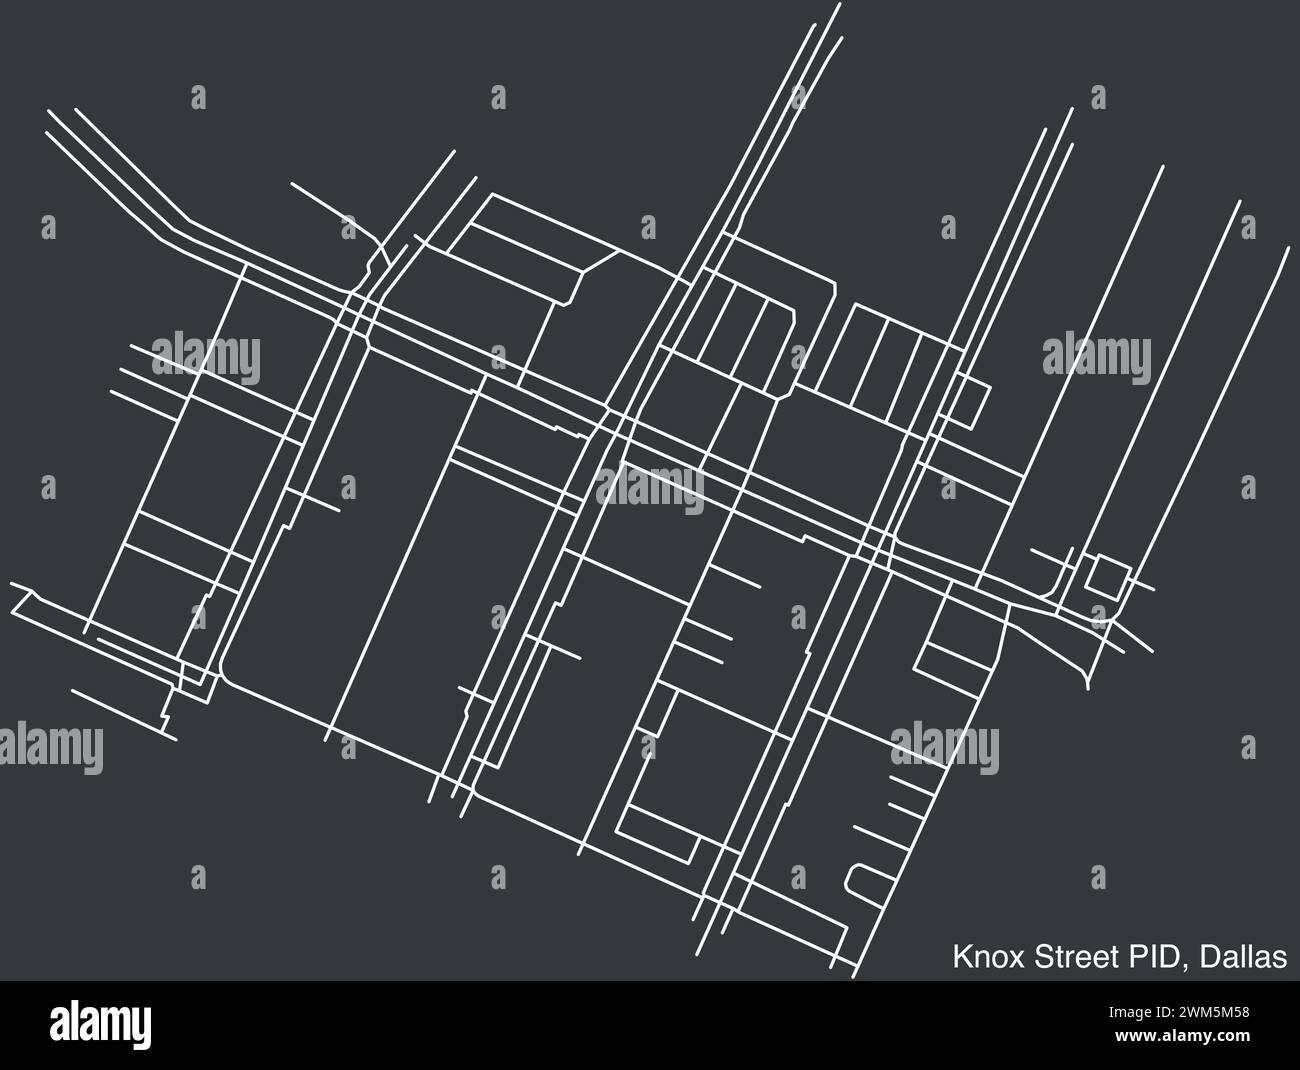 Street roads map of the KNOX STREET Public Improvement District neighborhood, DALLAS Stock Vector